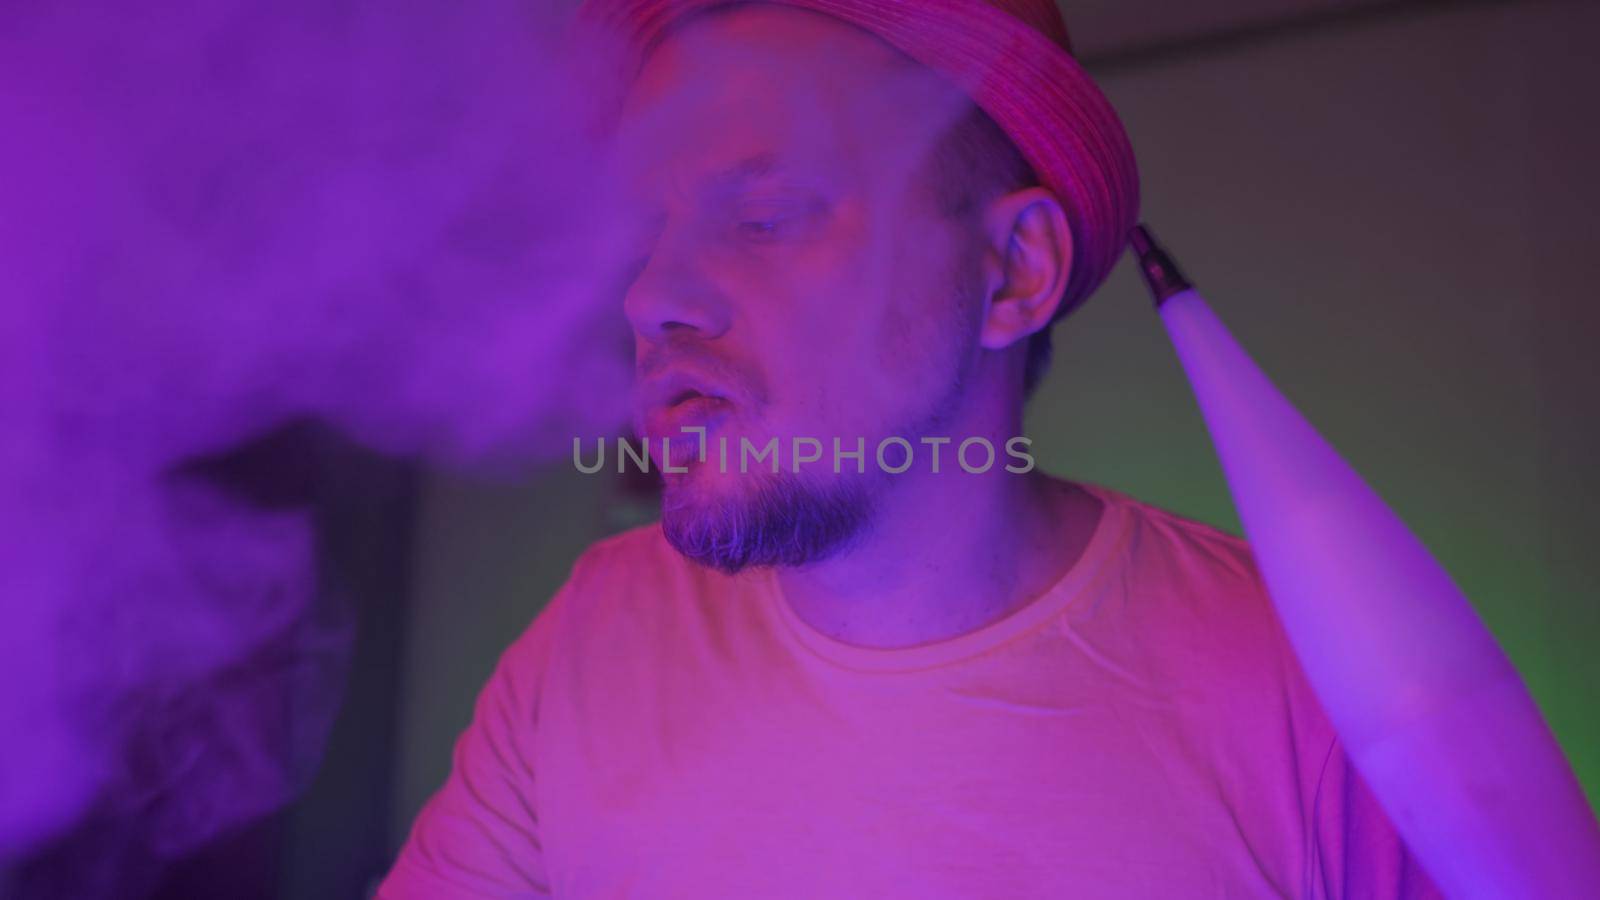 Smoker Of Hookah Exhales Smoke In Neon Lighting, Creative Man In Hat Smoking Hookah Sitting In Foggy Dark Room With Fluorescent Illumination, Quarantine Concept